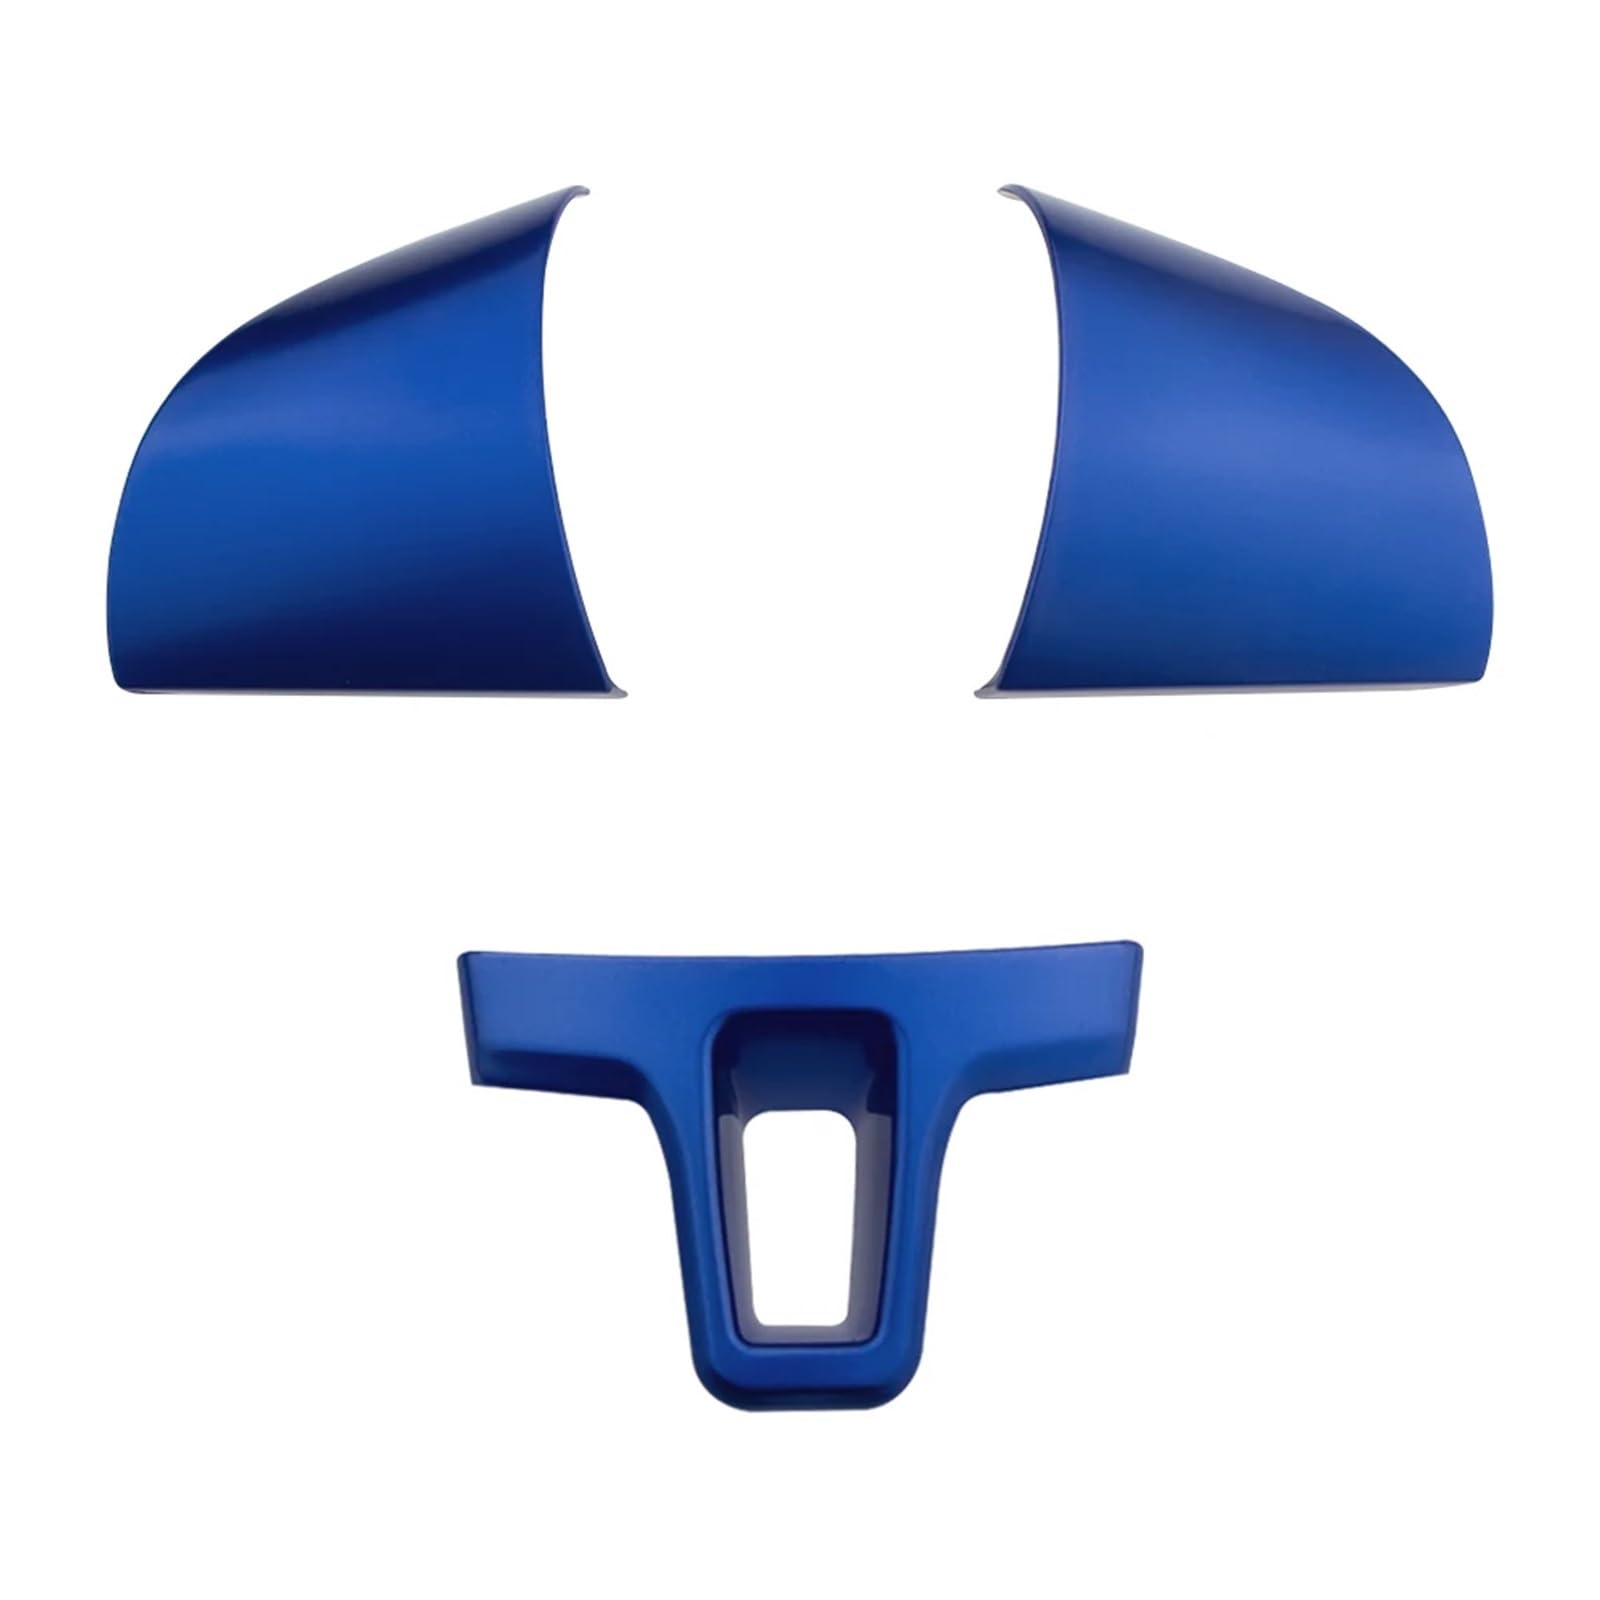 LFDTO Chrom Auto Lenkrad Dekoration Aufkleber Trim Abdeckung Fit for Volkswagen Fit for VW Tiguan 2010-2015 Fit for Touran Fit for Passat 2011-2015 Zubehör (Color : Blue) von LFDTO